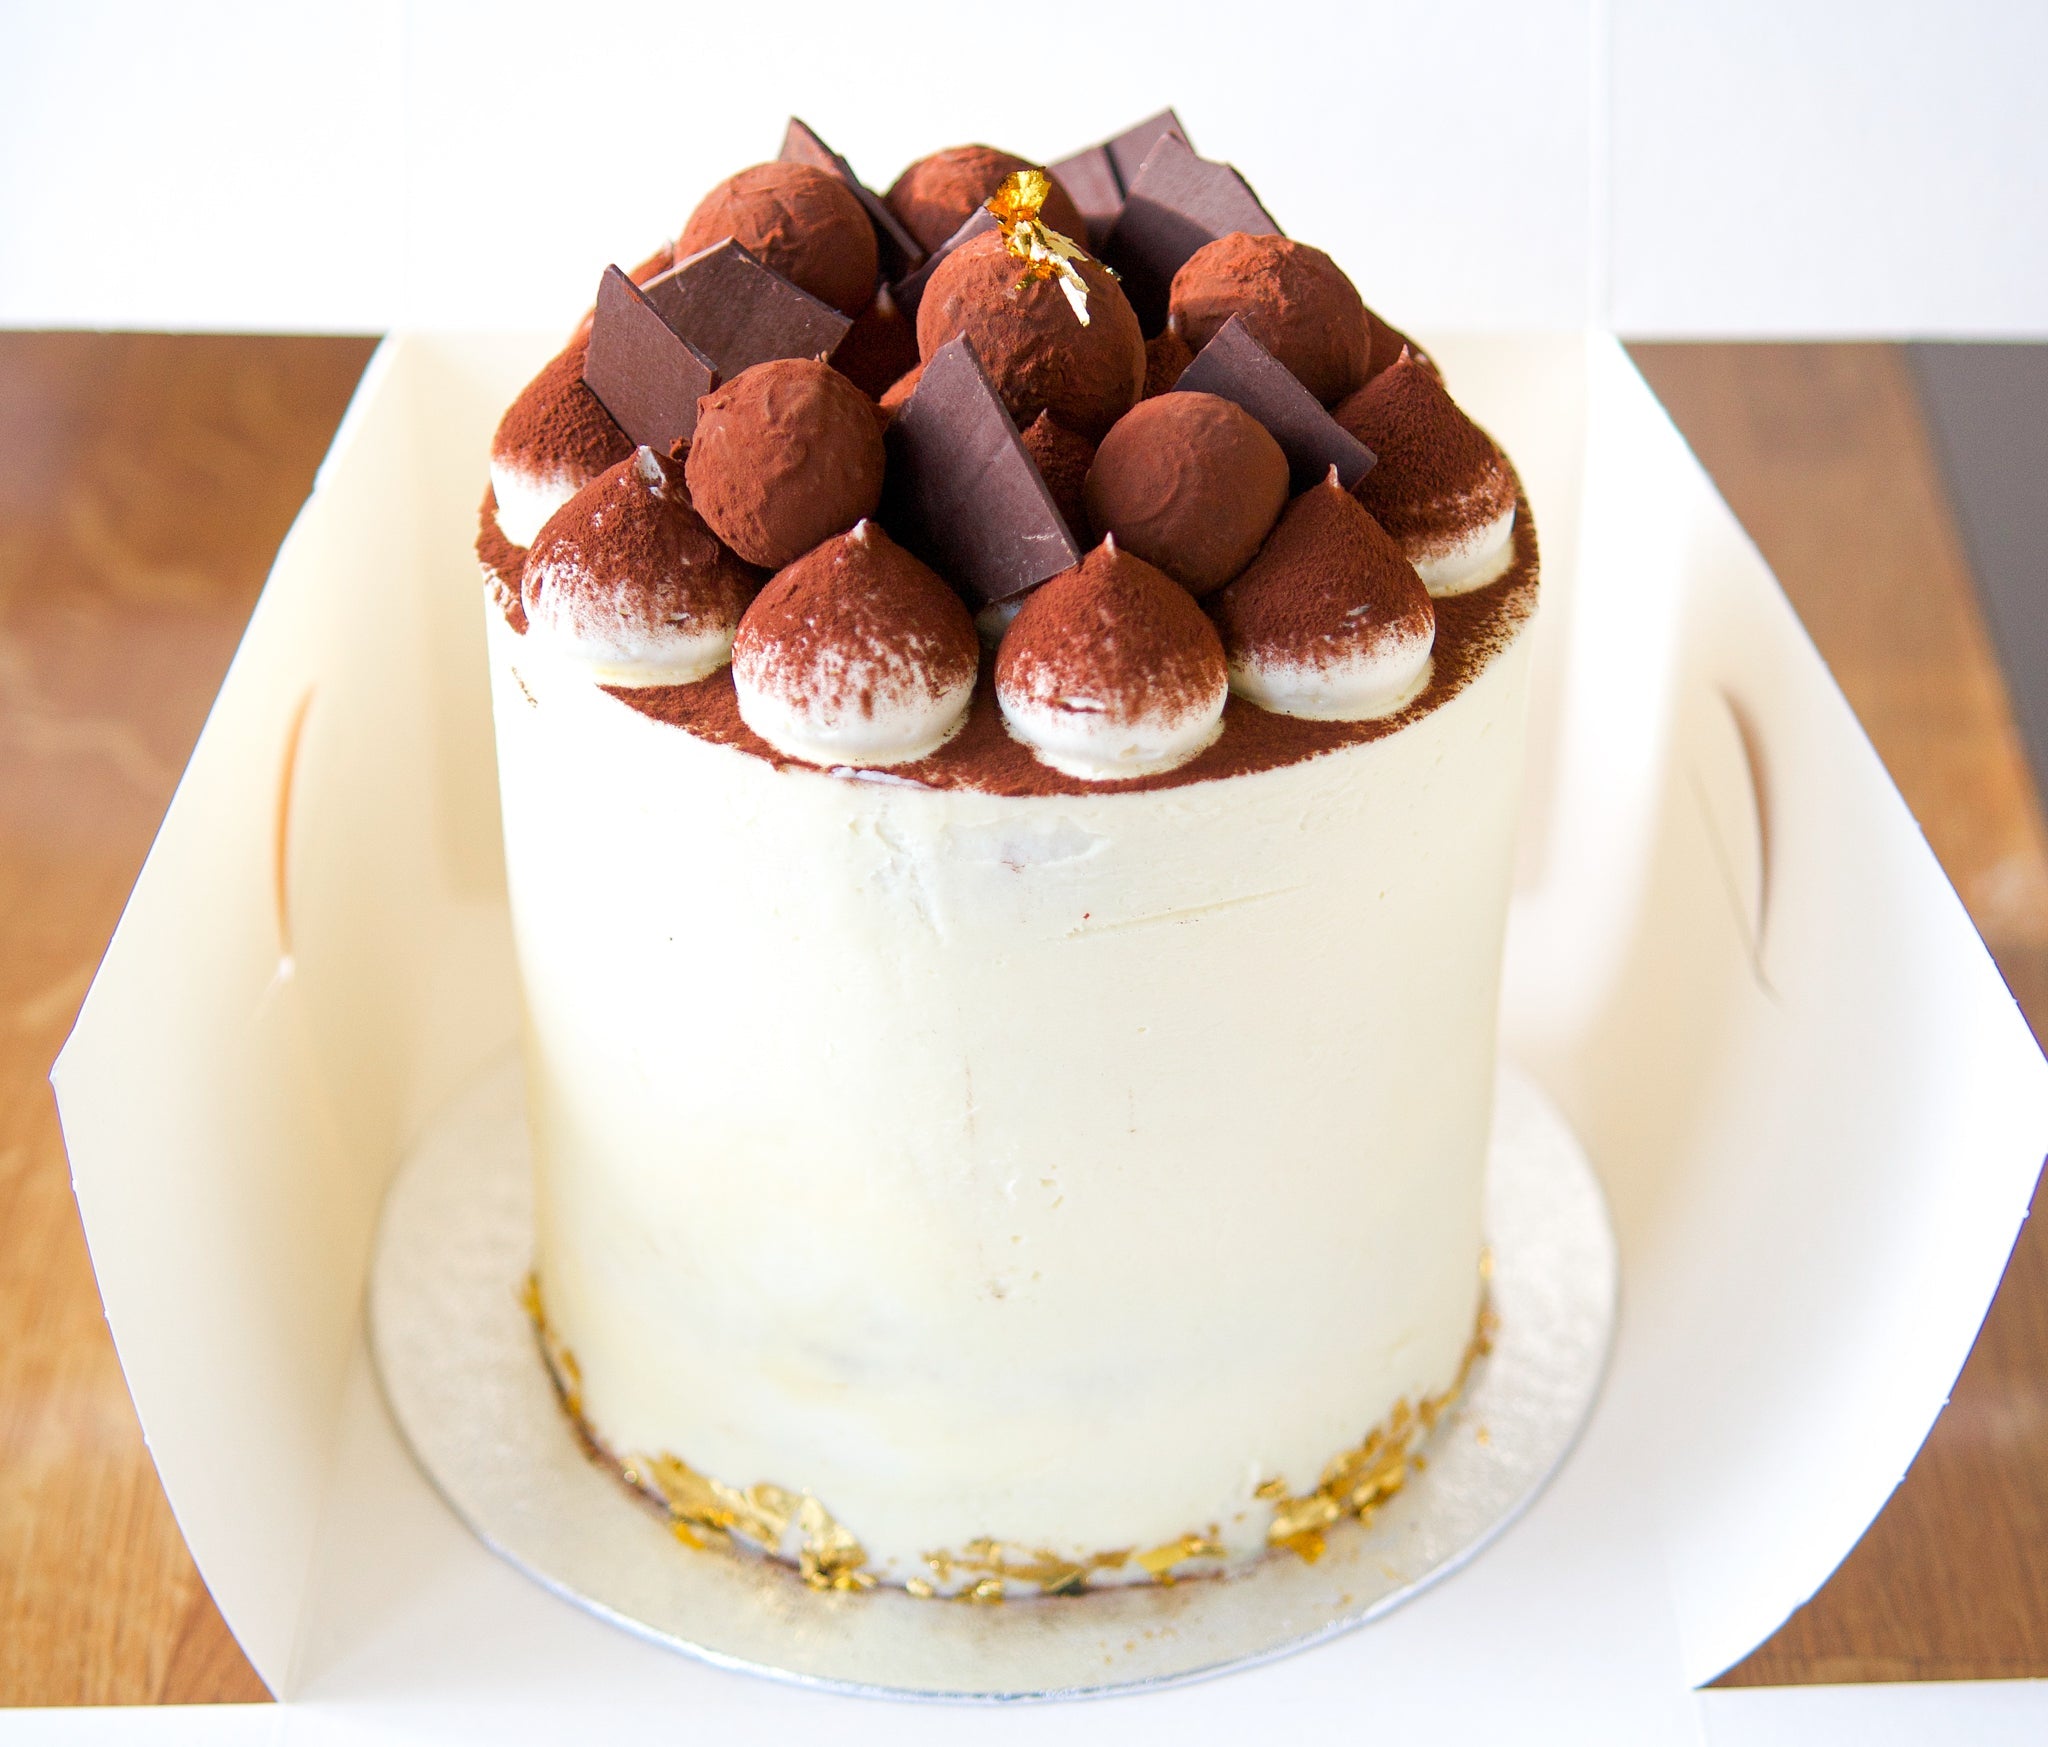 Chocolate Drip Birthday Cake | Cake Trays